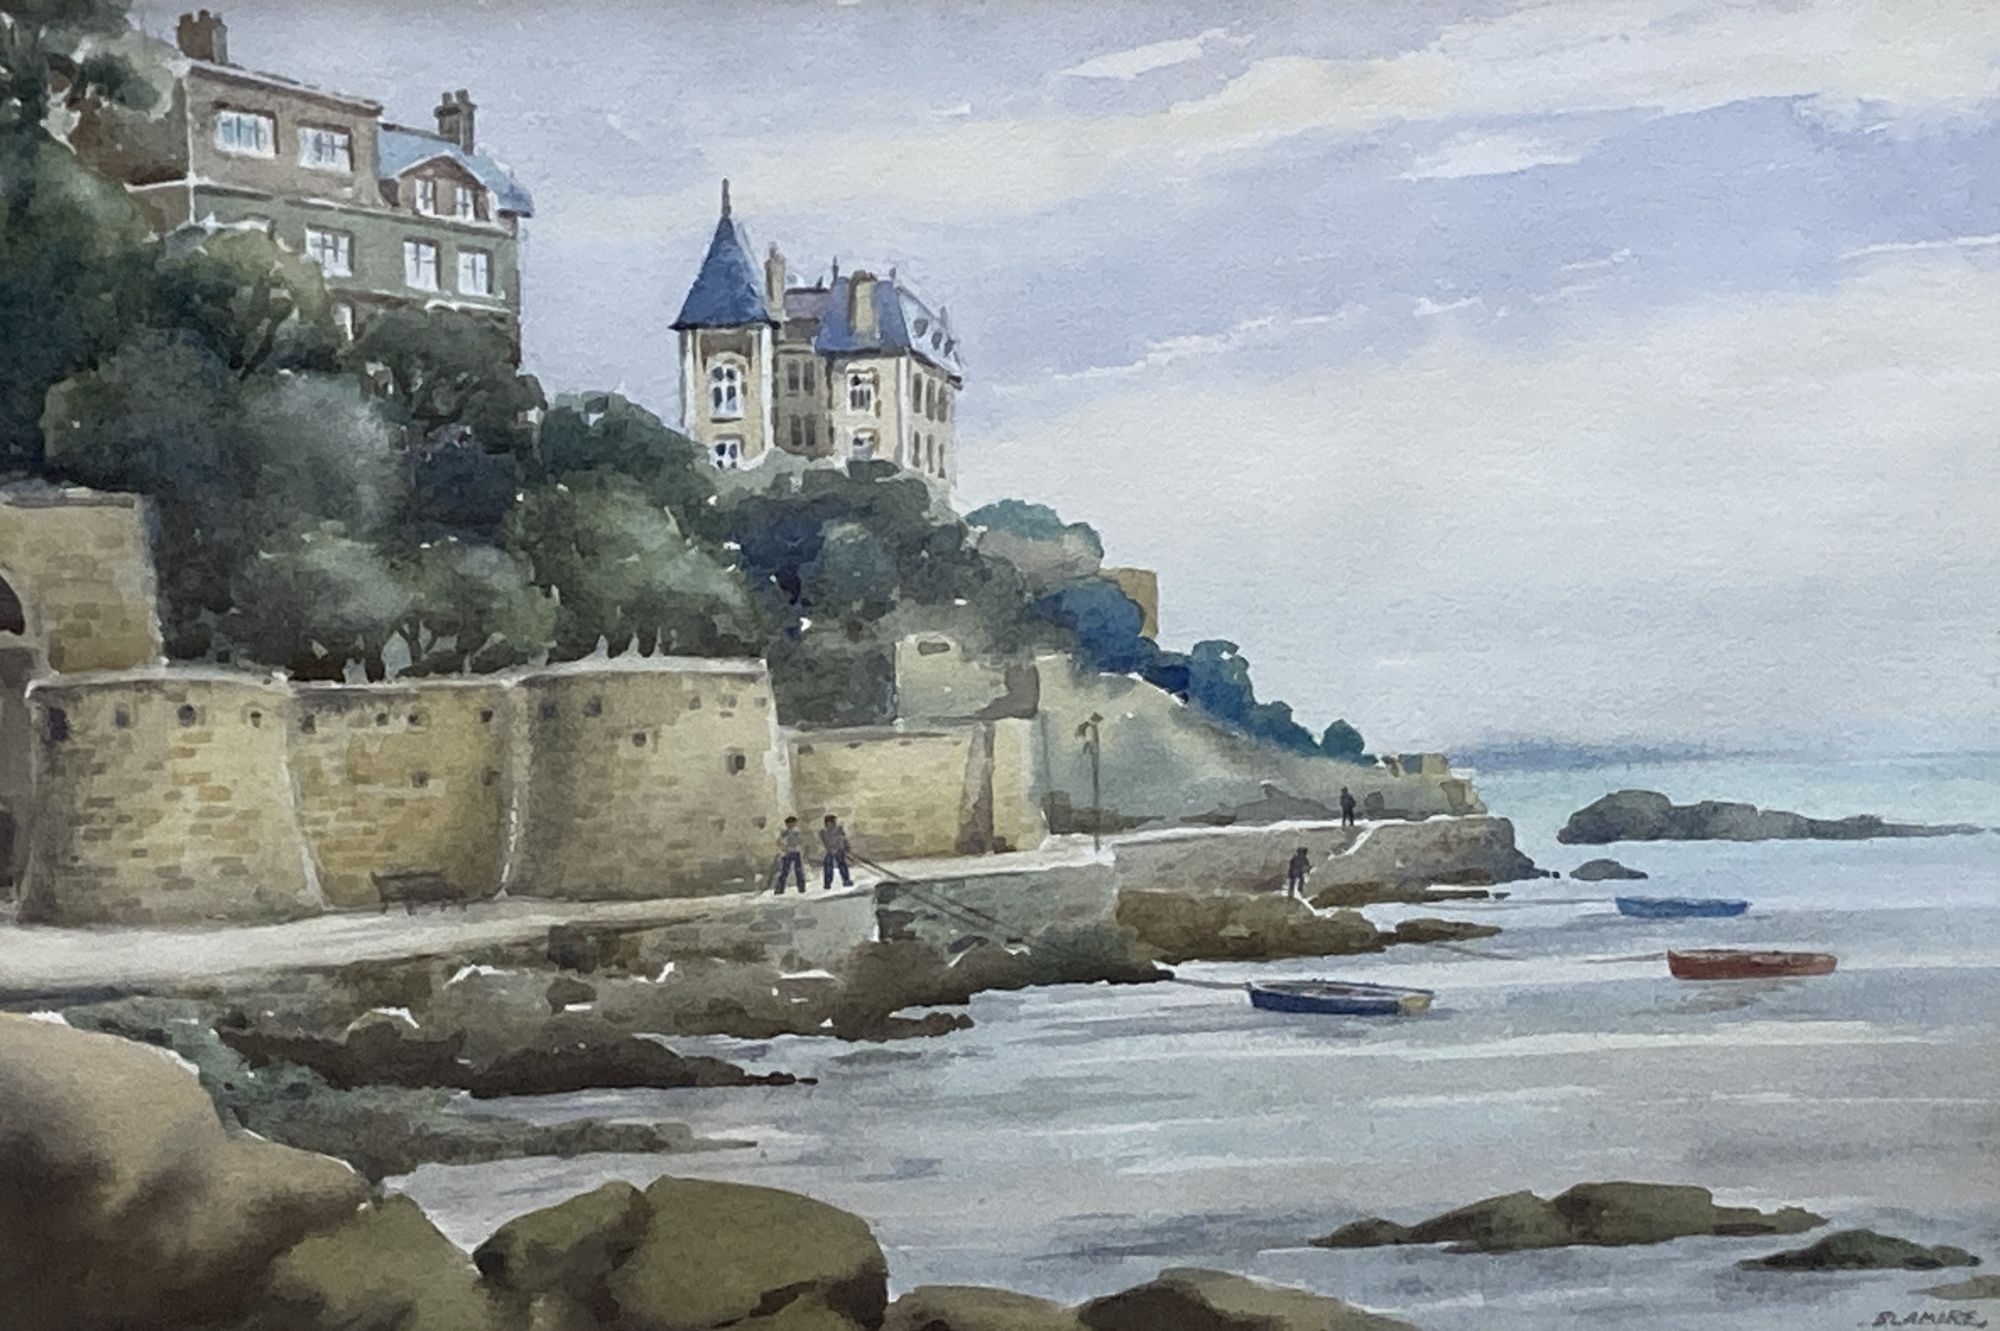 Billy Blamire, two watercolours, Scottish coastal landscape and Street scene, 28 x 39cm and 34 x 23cm